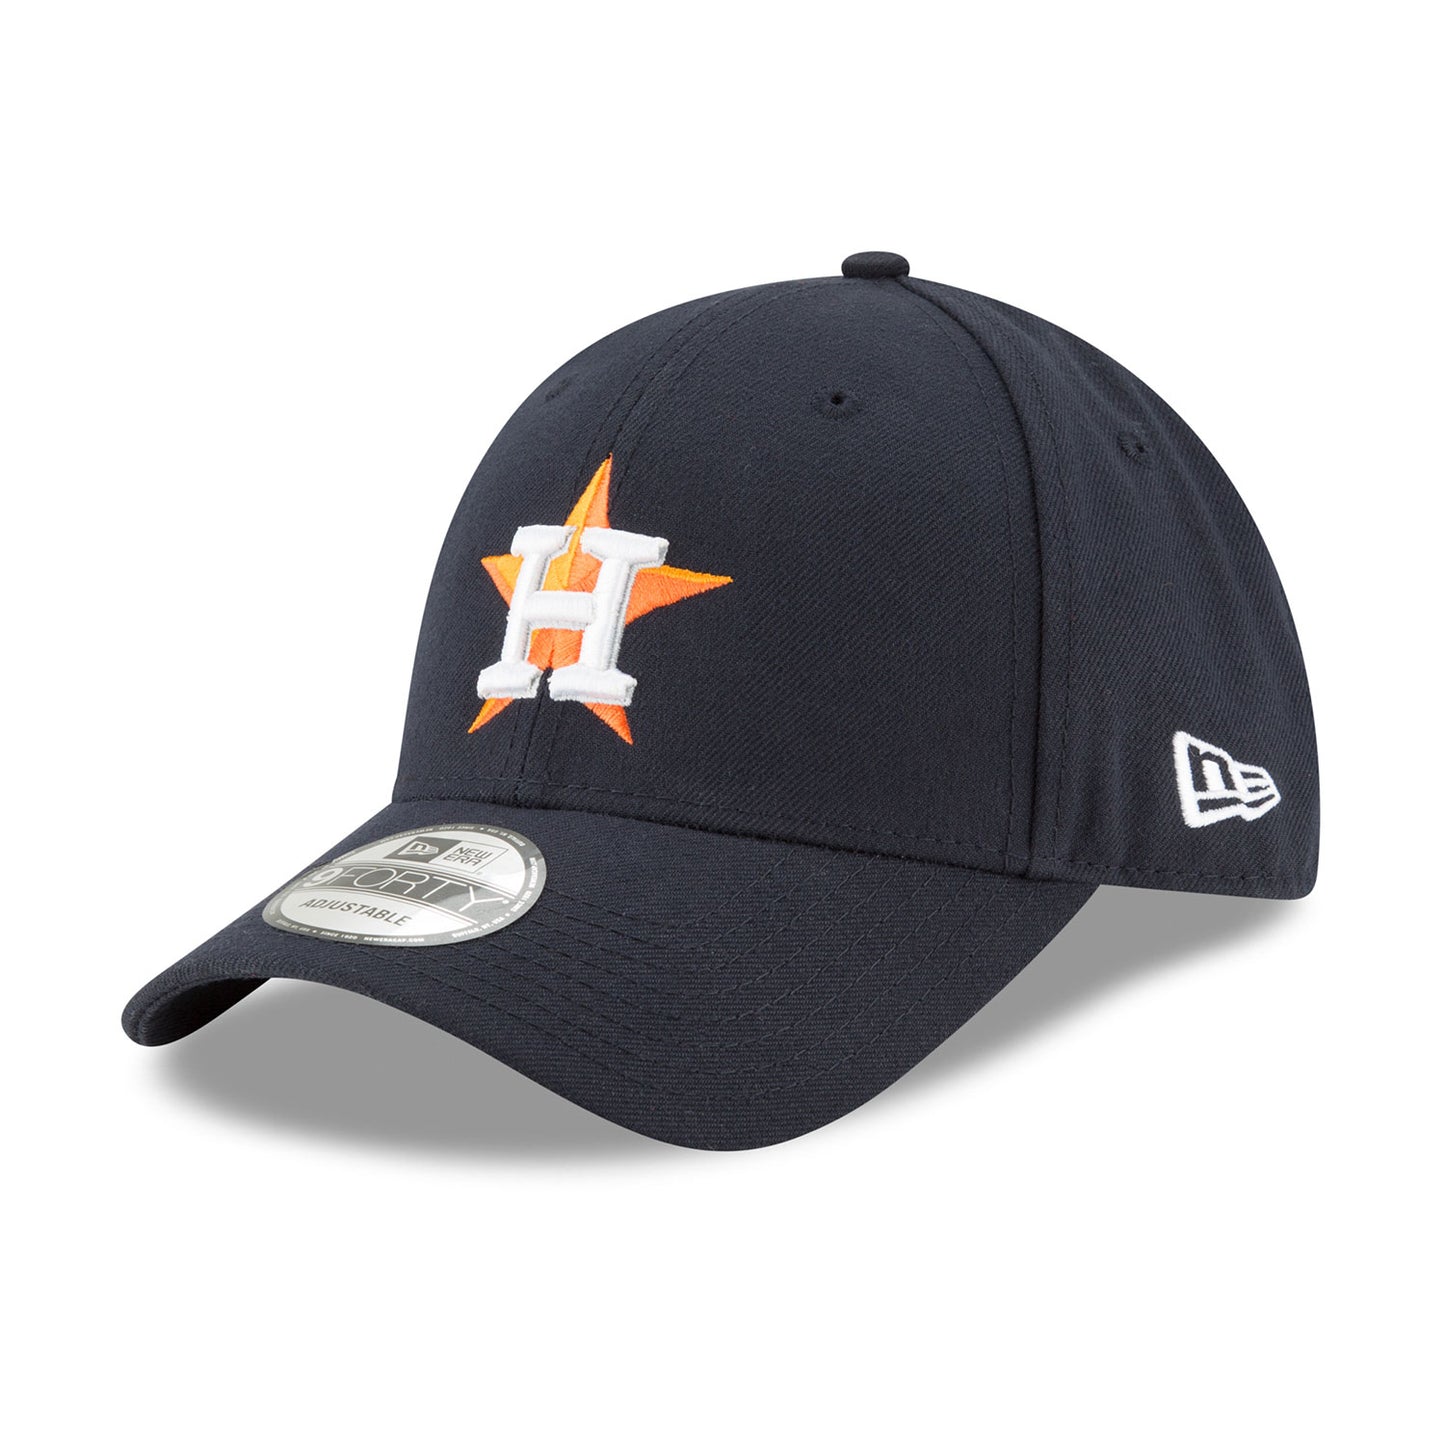 THE LEAGUE Houston Astros 9FORTY New Era Cap